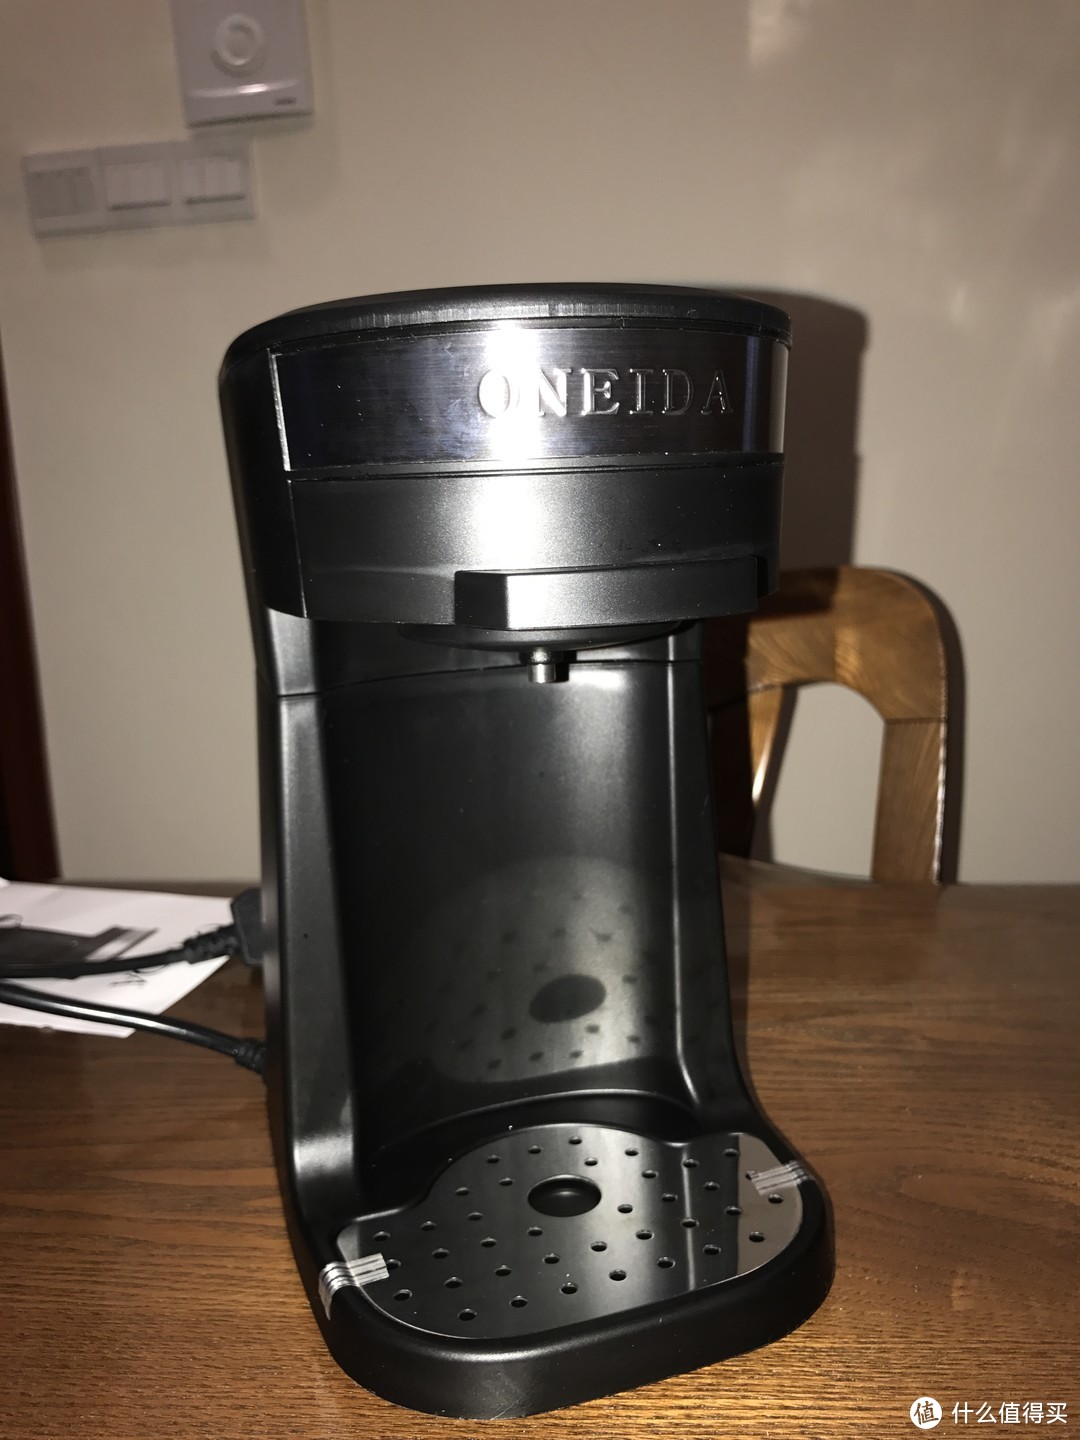 ONEIDA N1多功能懒人咖啡机